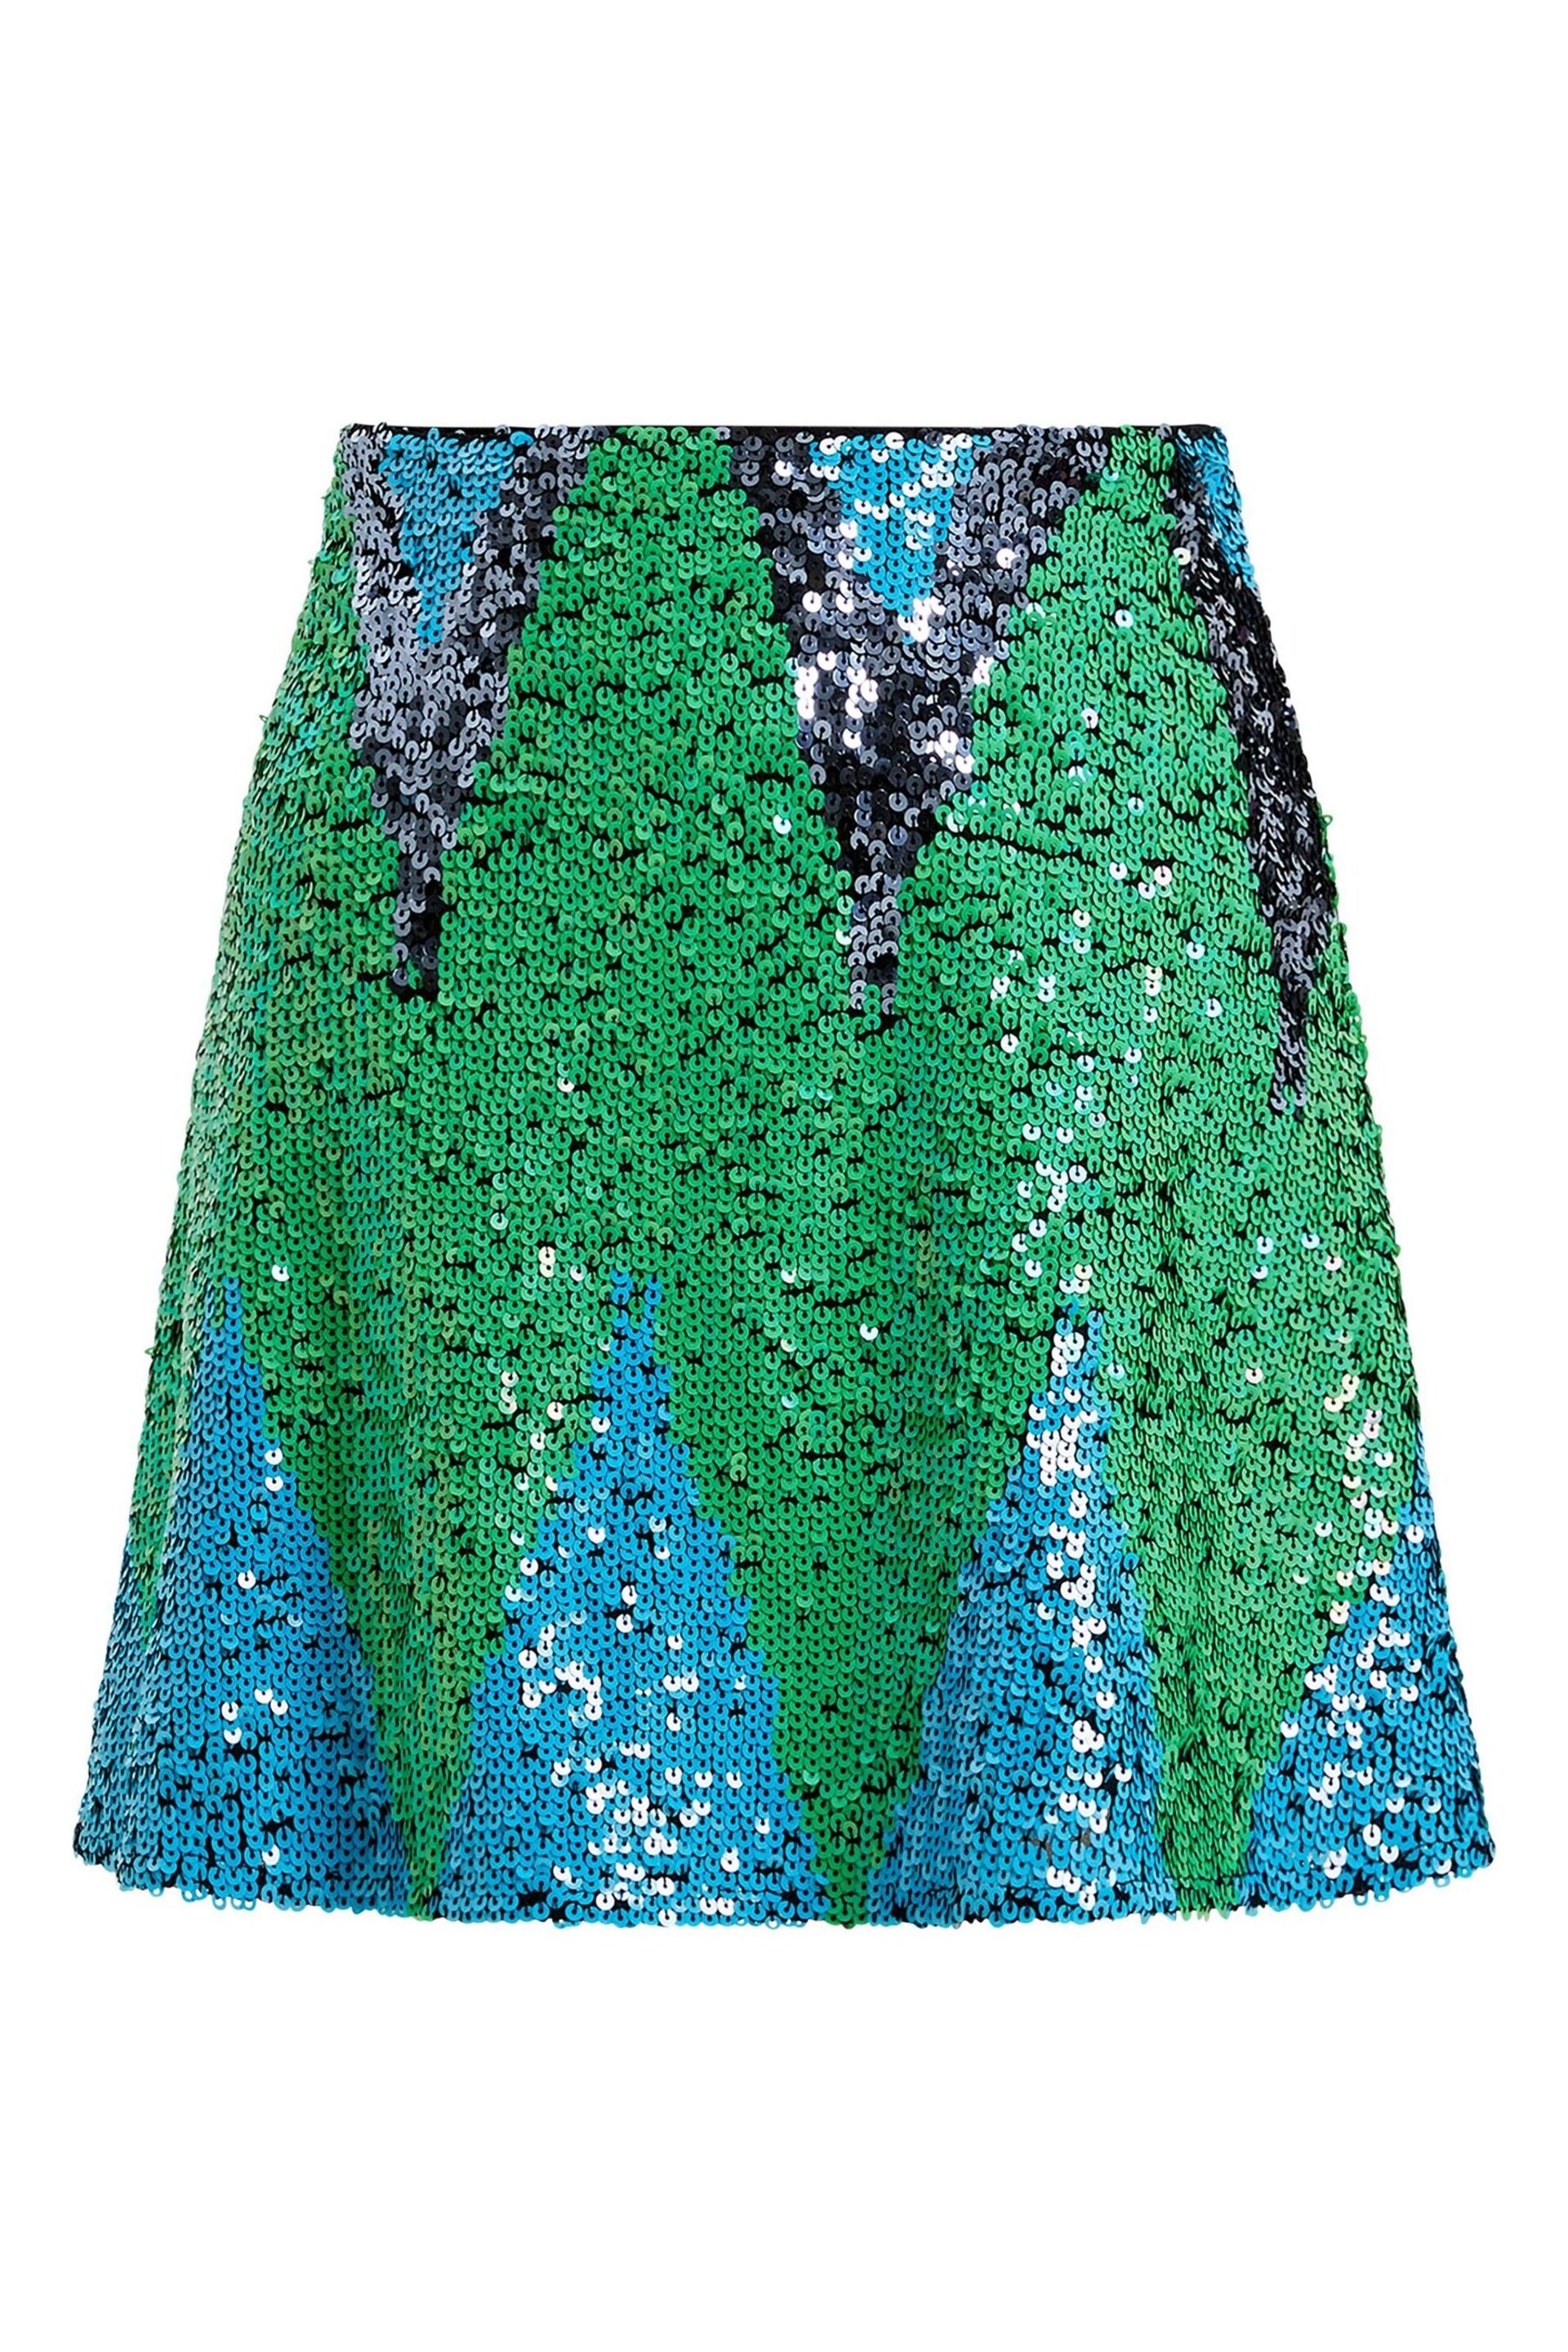 French Connection Emin Embellished Skirt - Image 2 of 2